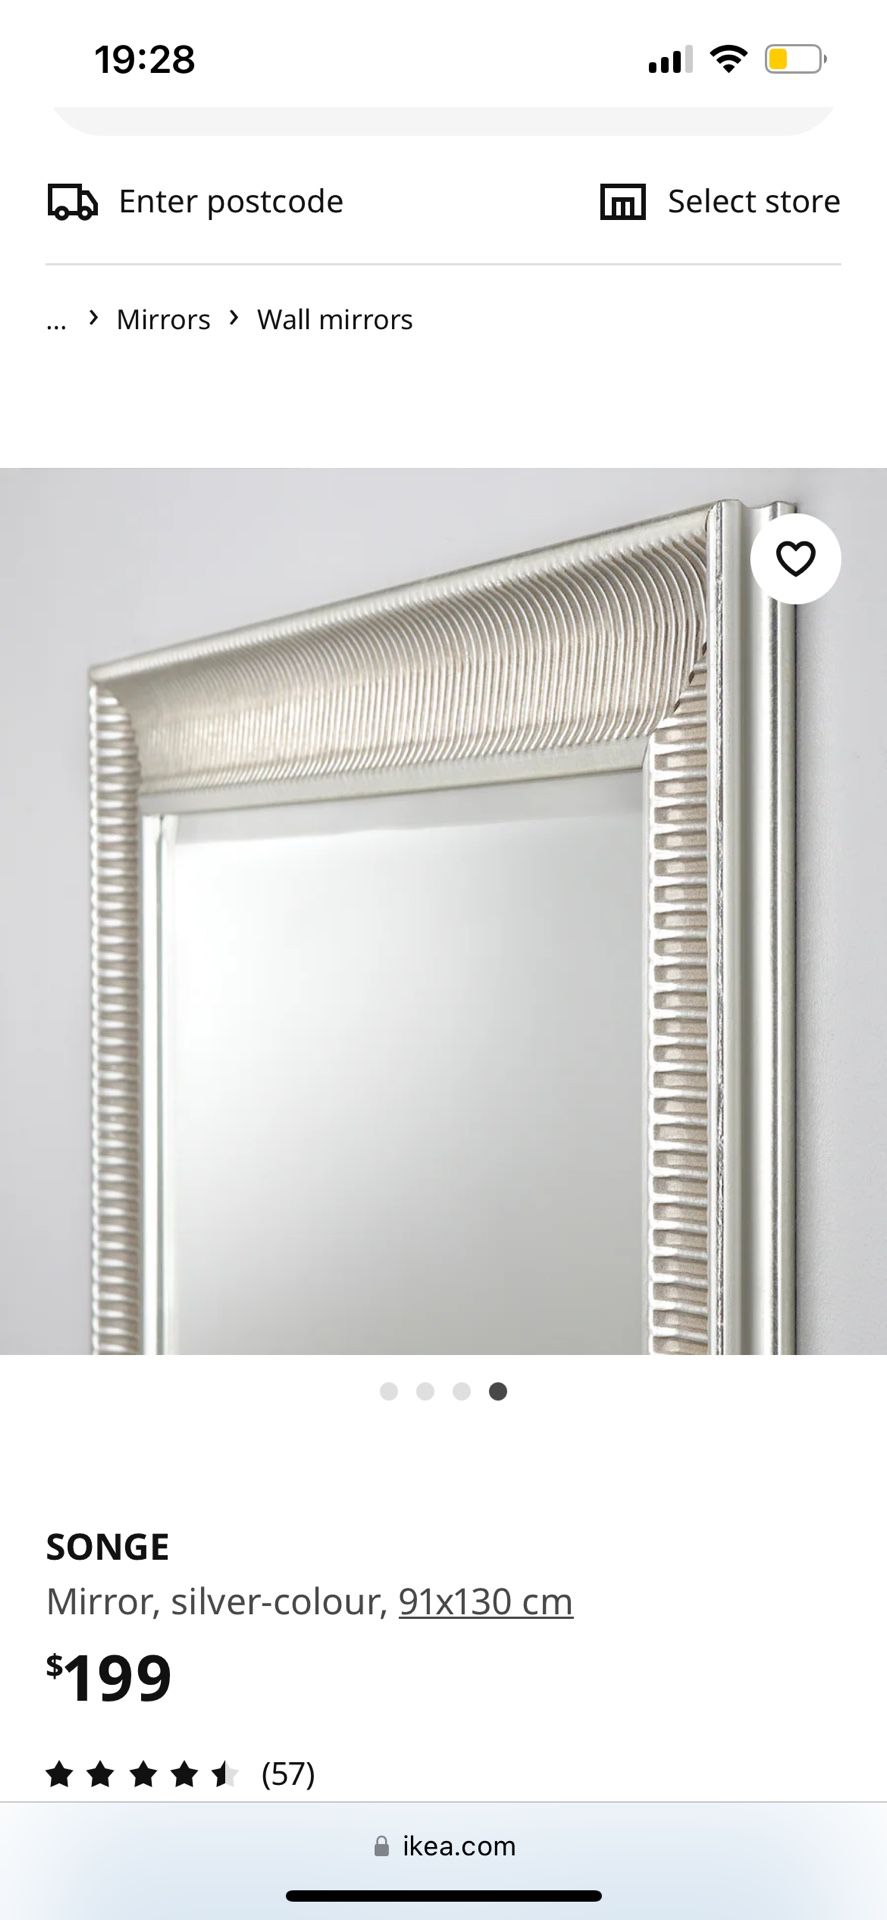 IKEA Songe mirror